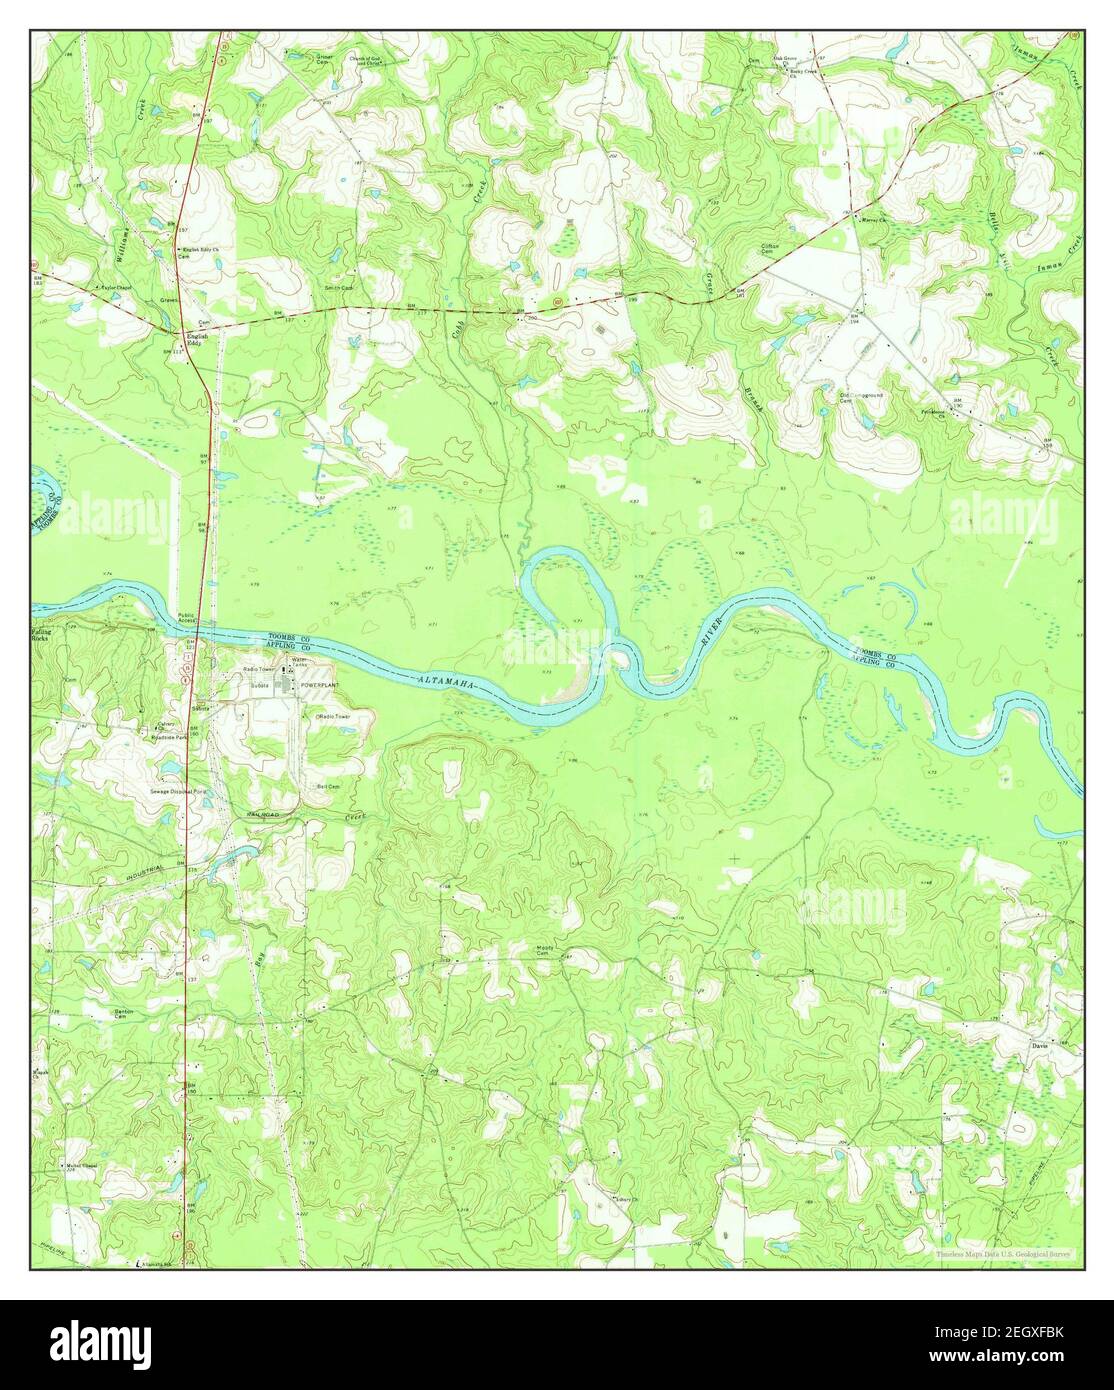 Baxley NE, Georgia, map 1970, 1:24000, United States of America by Timeless Maps, data U.S. Geological Survey Foto Stock